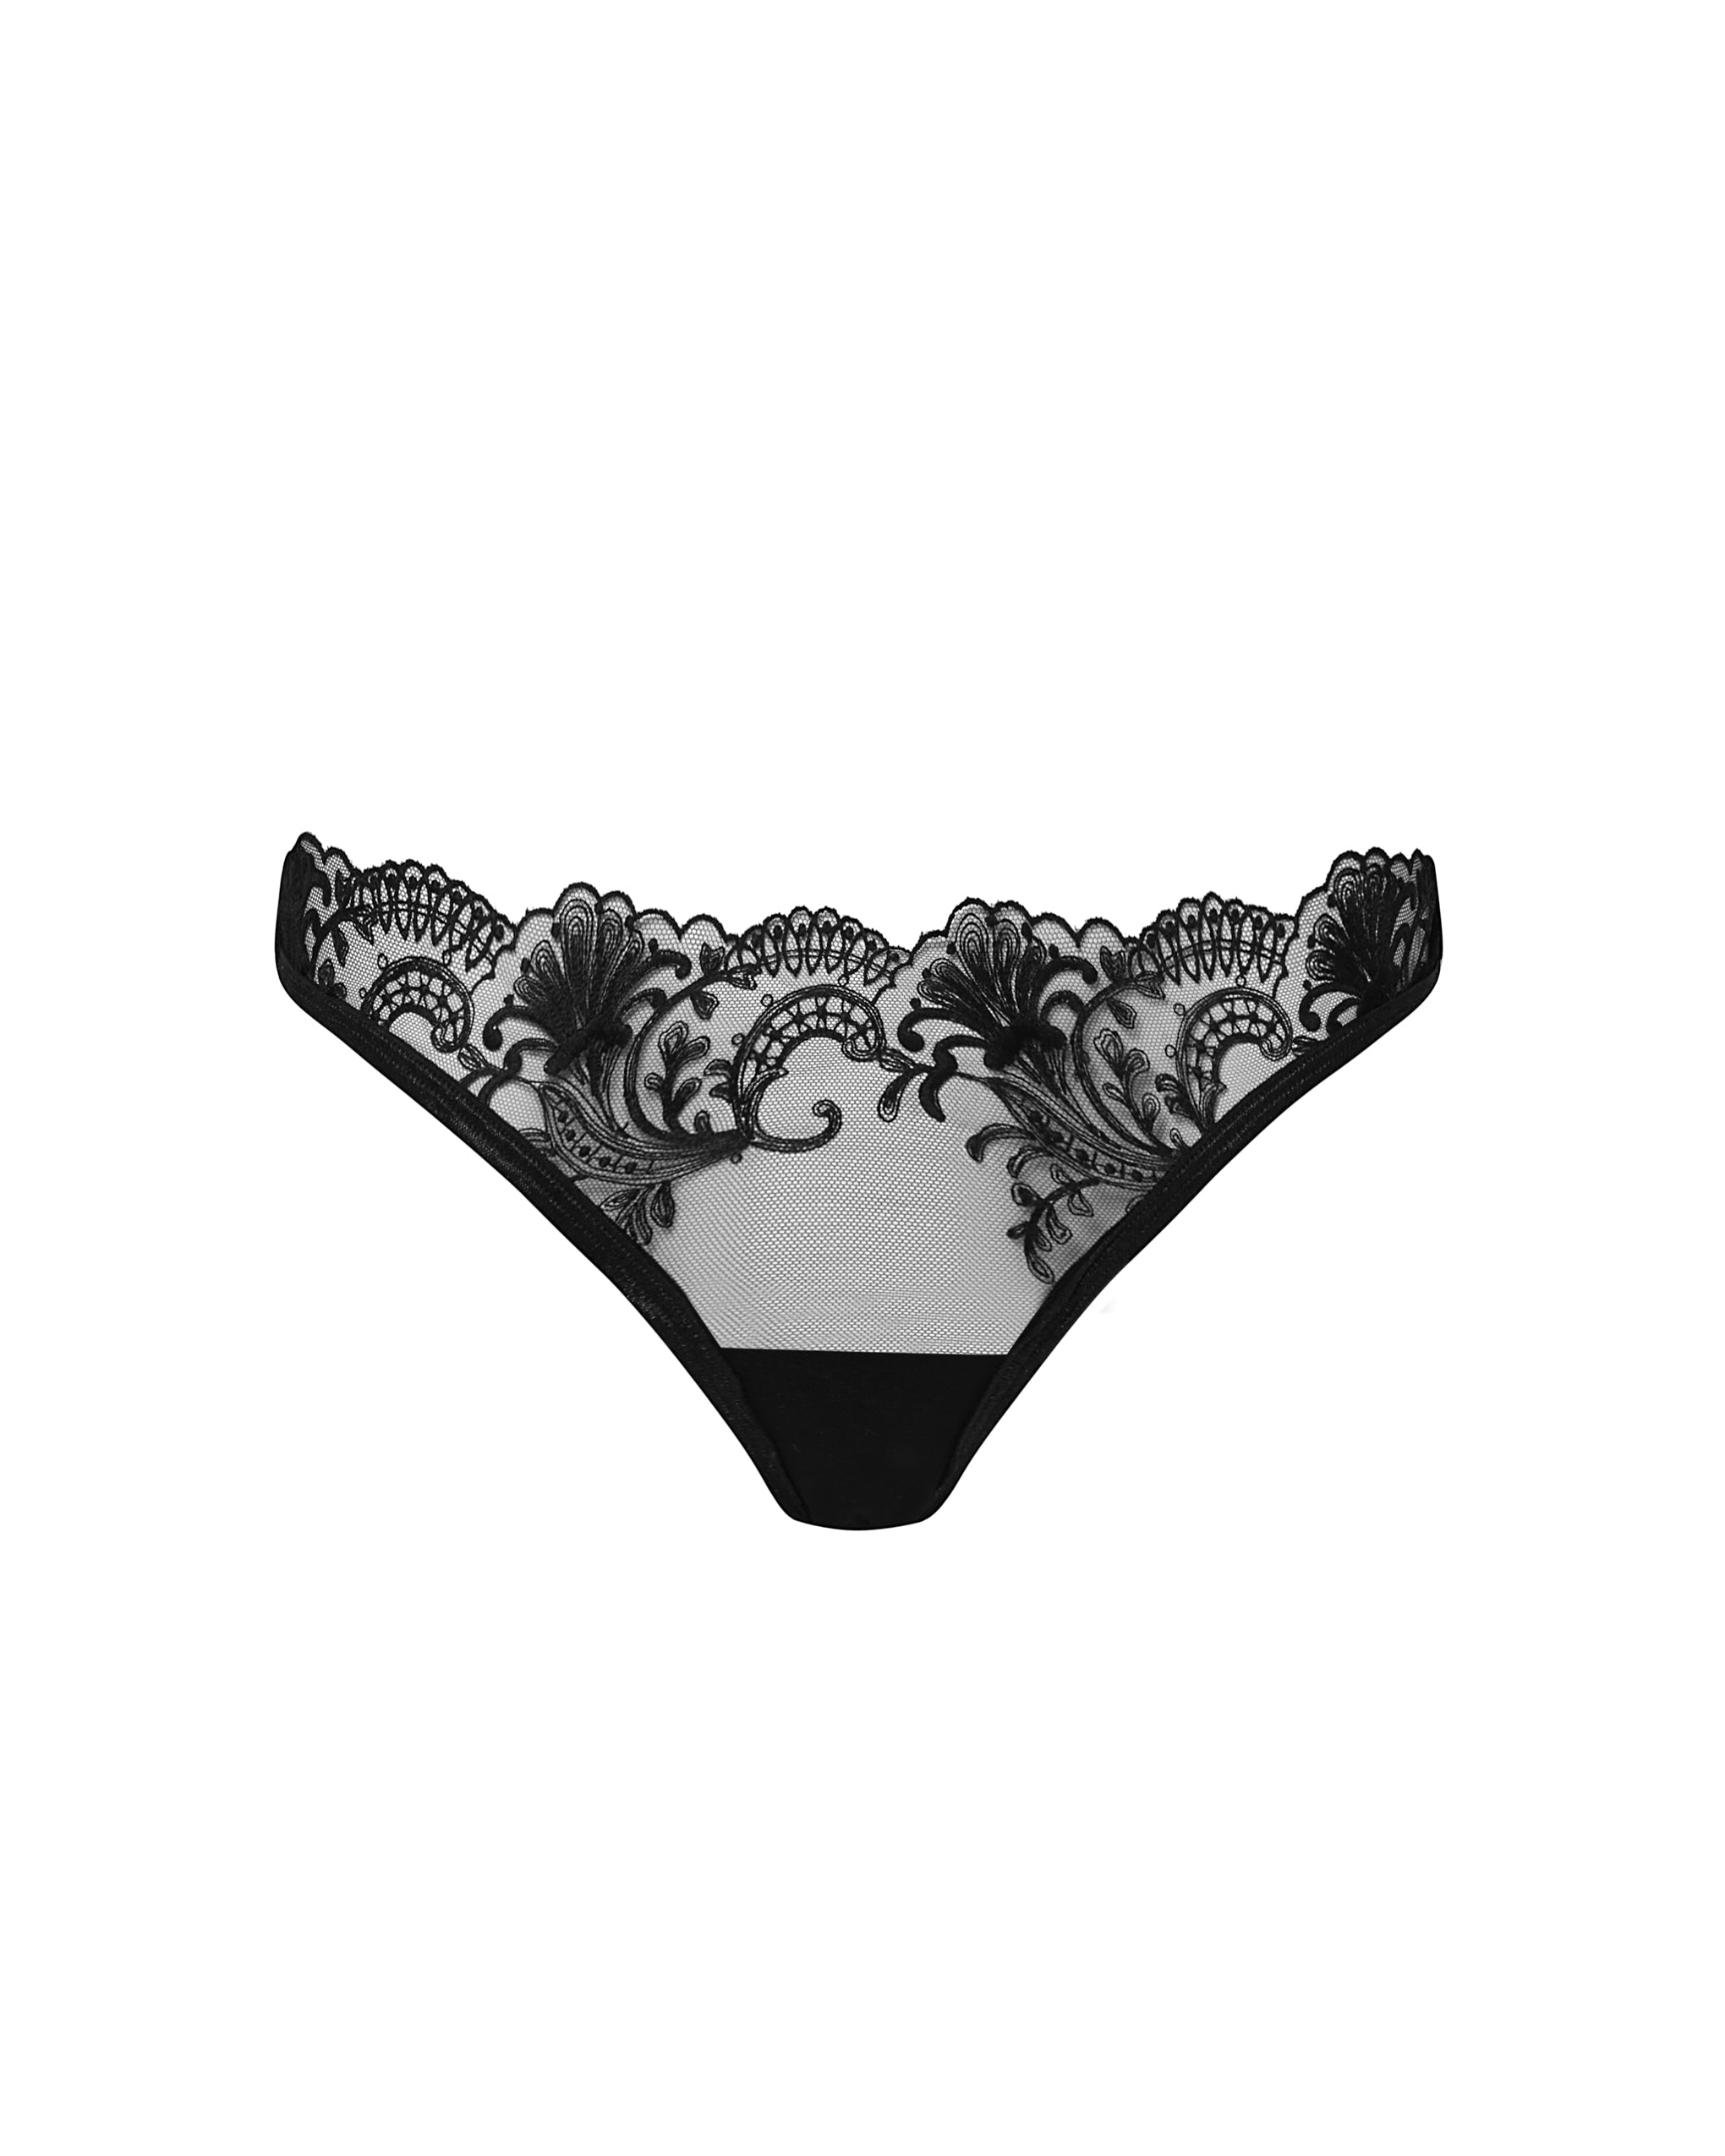 Bluebella Estelle mesh sheer lingerie set with hardware detail in black